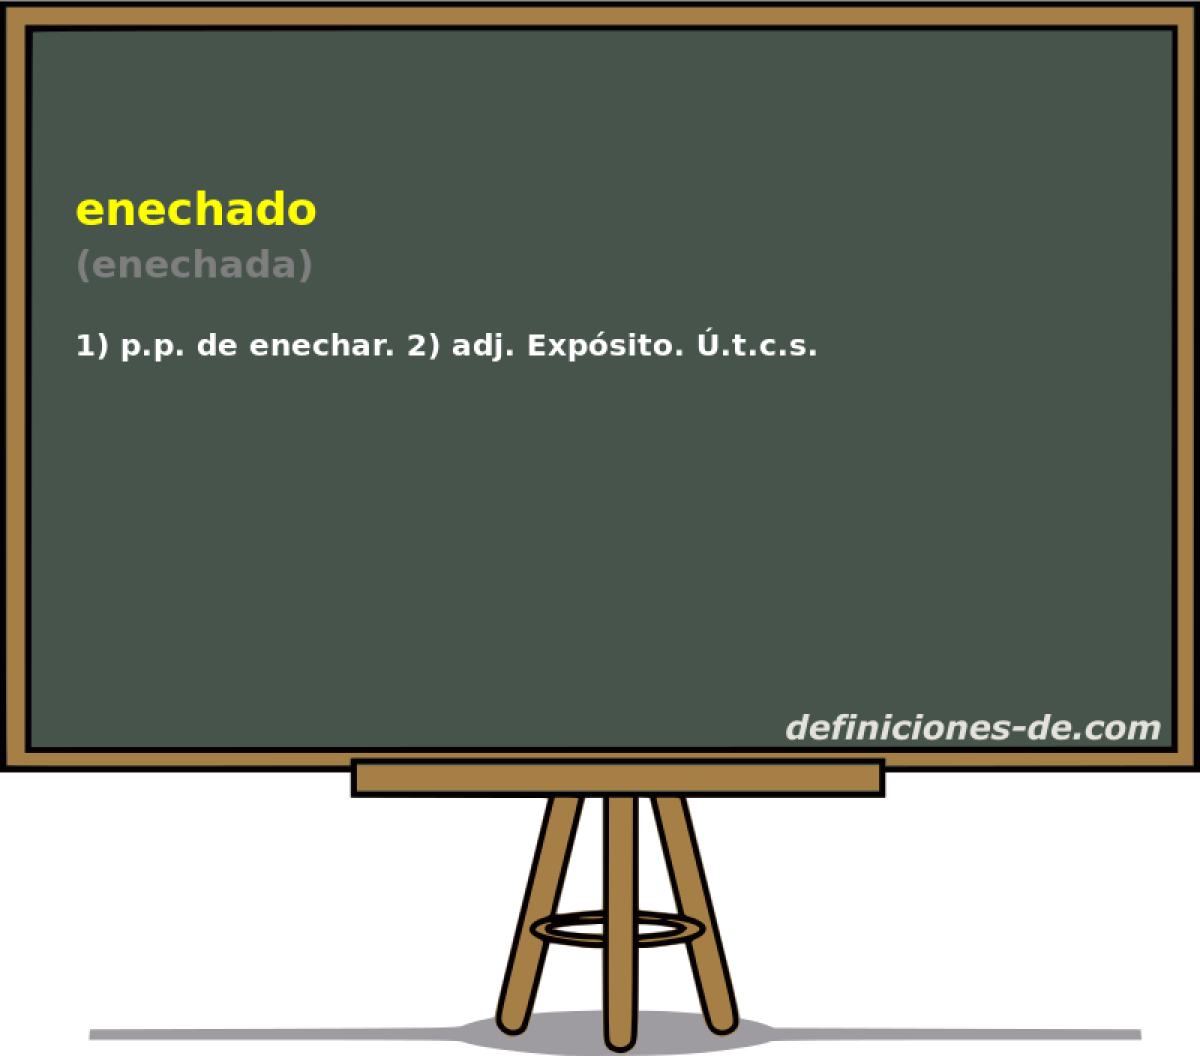 enechado (enechada)